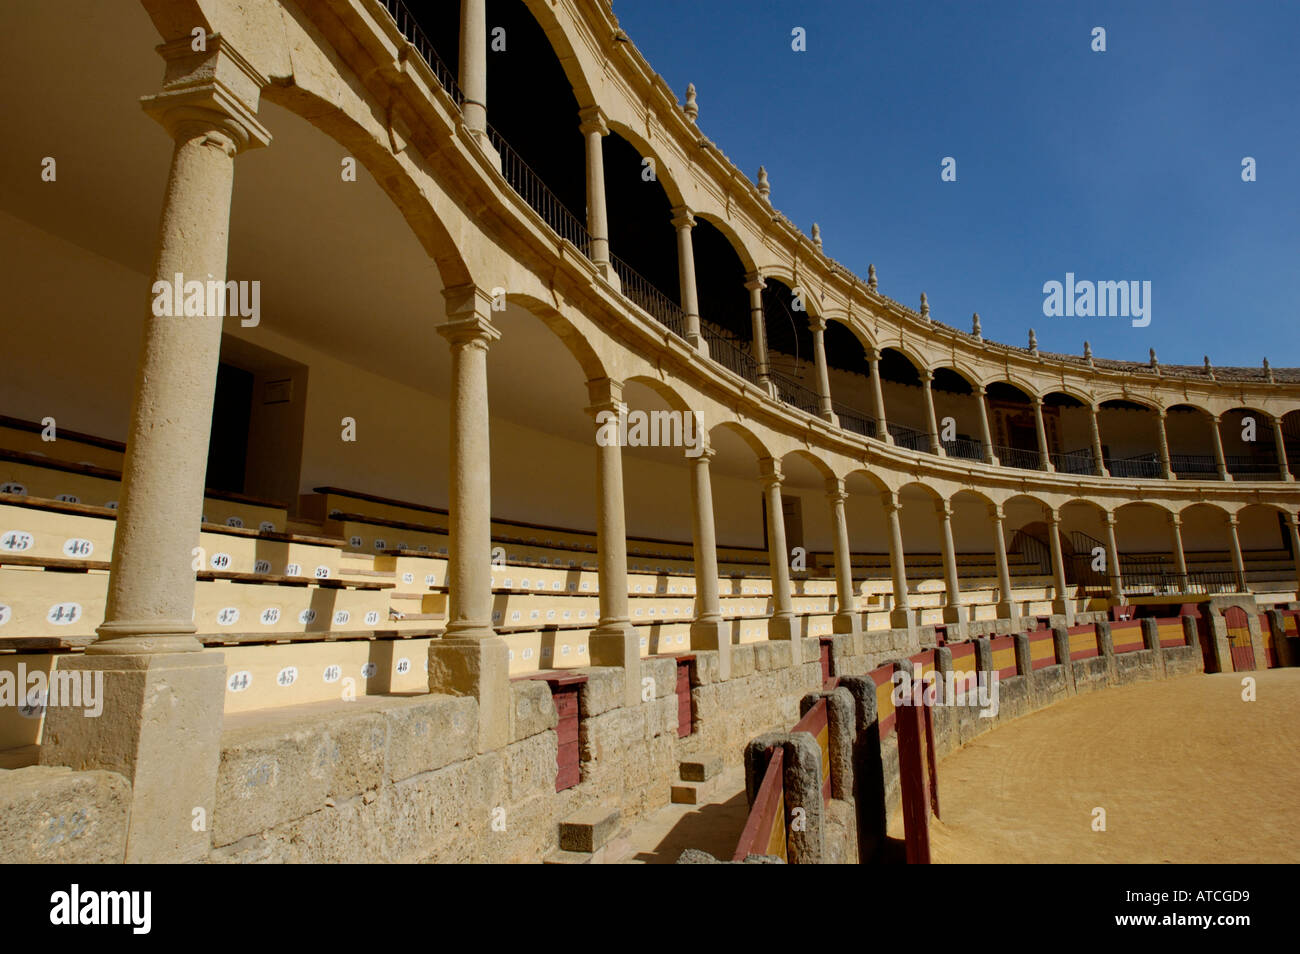 Empty seating at Plaza de Toros de Ronda, a bullring arena in Ronda, Andalucia, Spain. Stock Photo